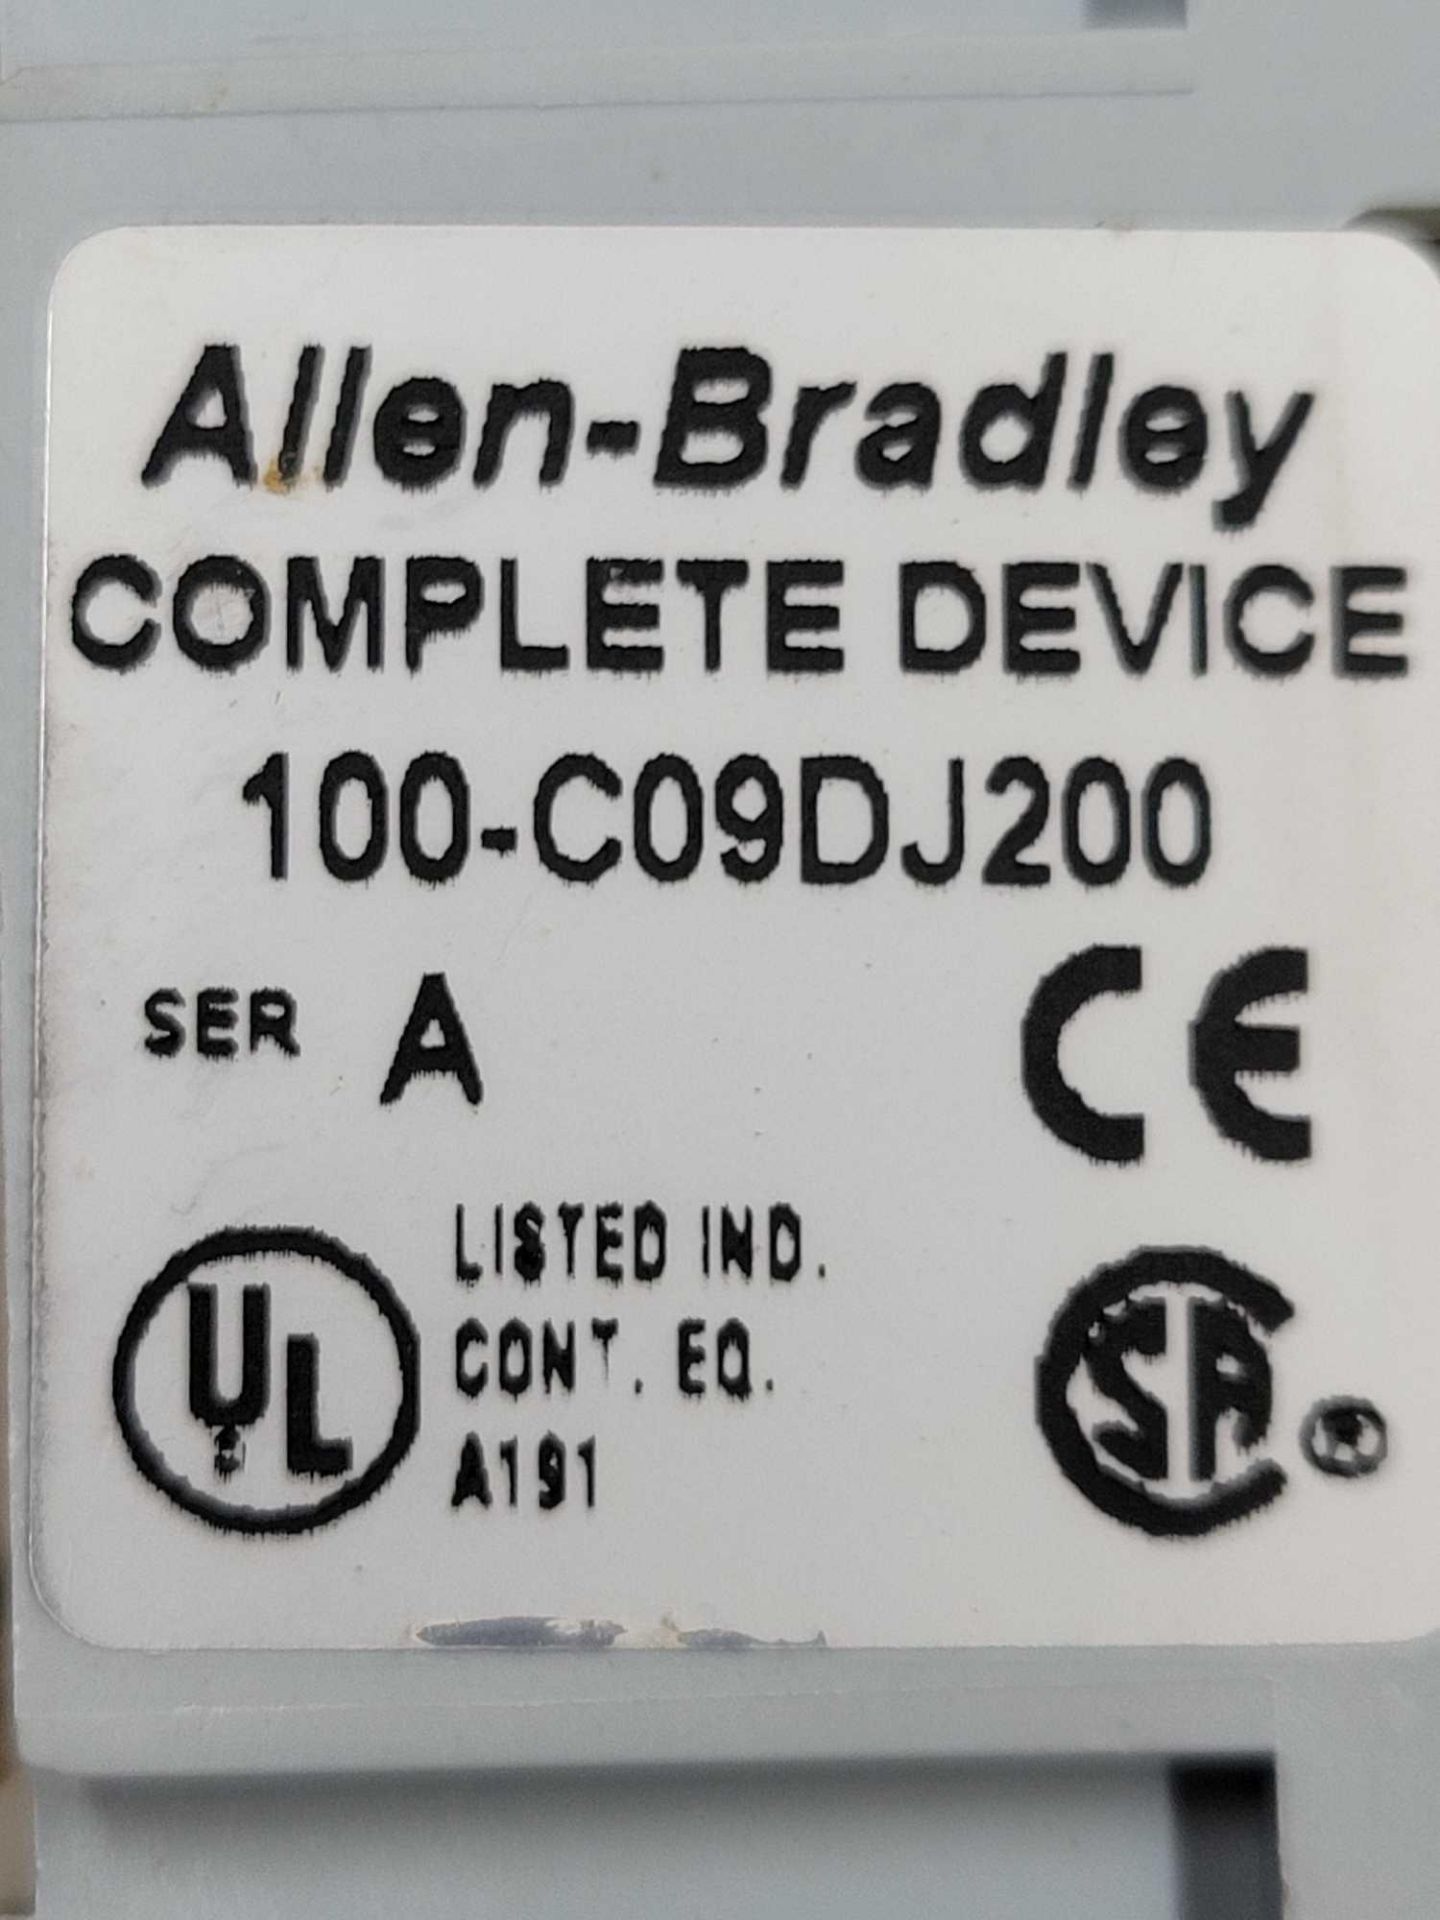 LOT OF 5 ALLEN BRADLEY 100-C09DJ200 / Series A Contactor  /  Lot Weight: 7.0 lbs - Image 6 of 7